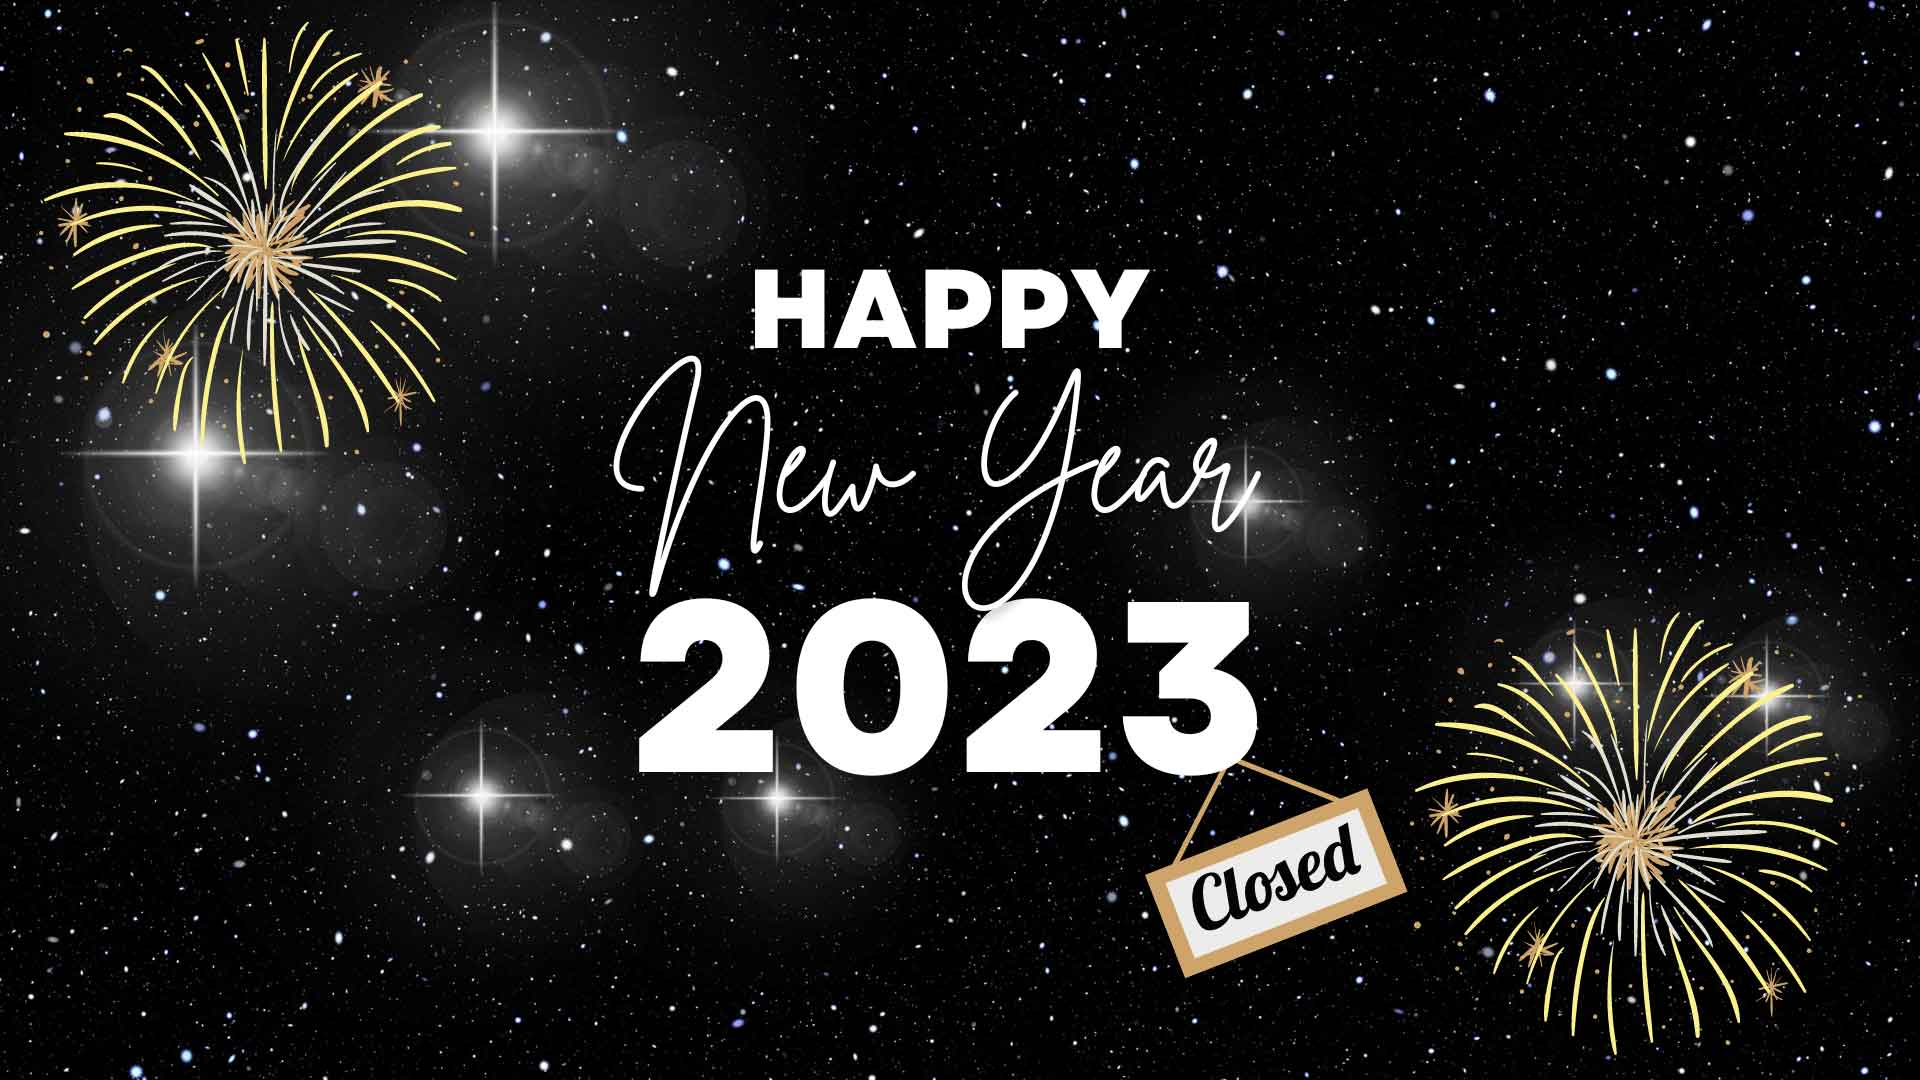 Happy New Year Closed